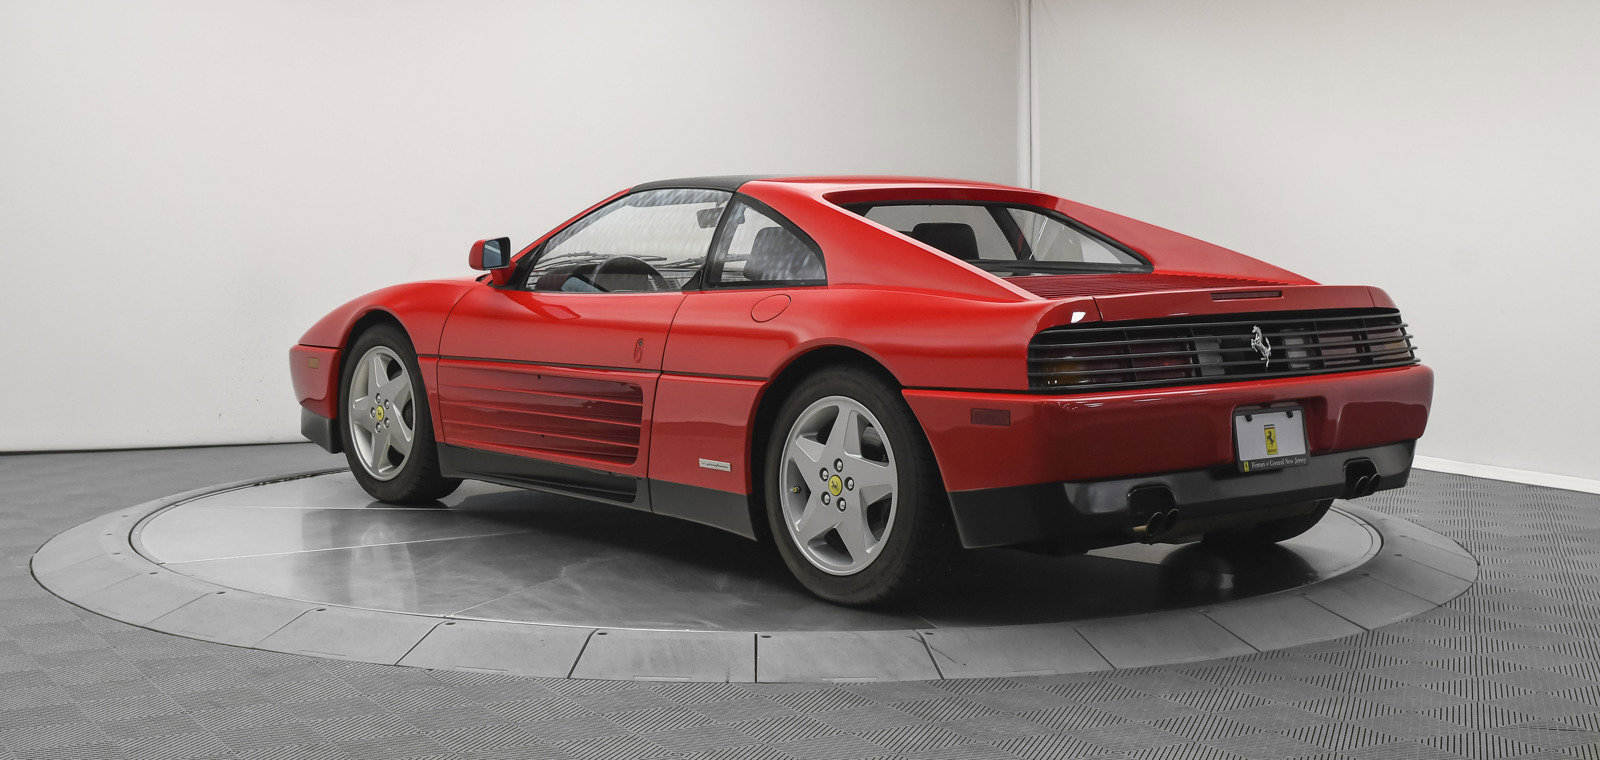 Ferrari 212 E Wallpapers